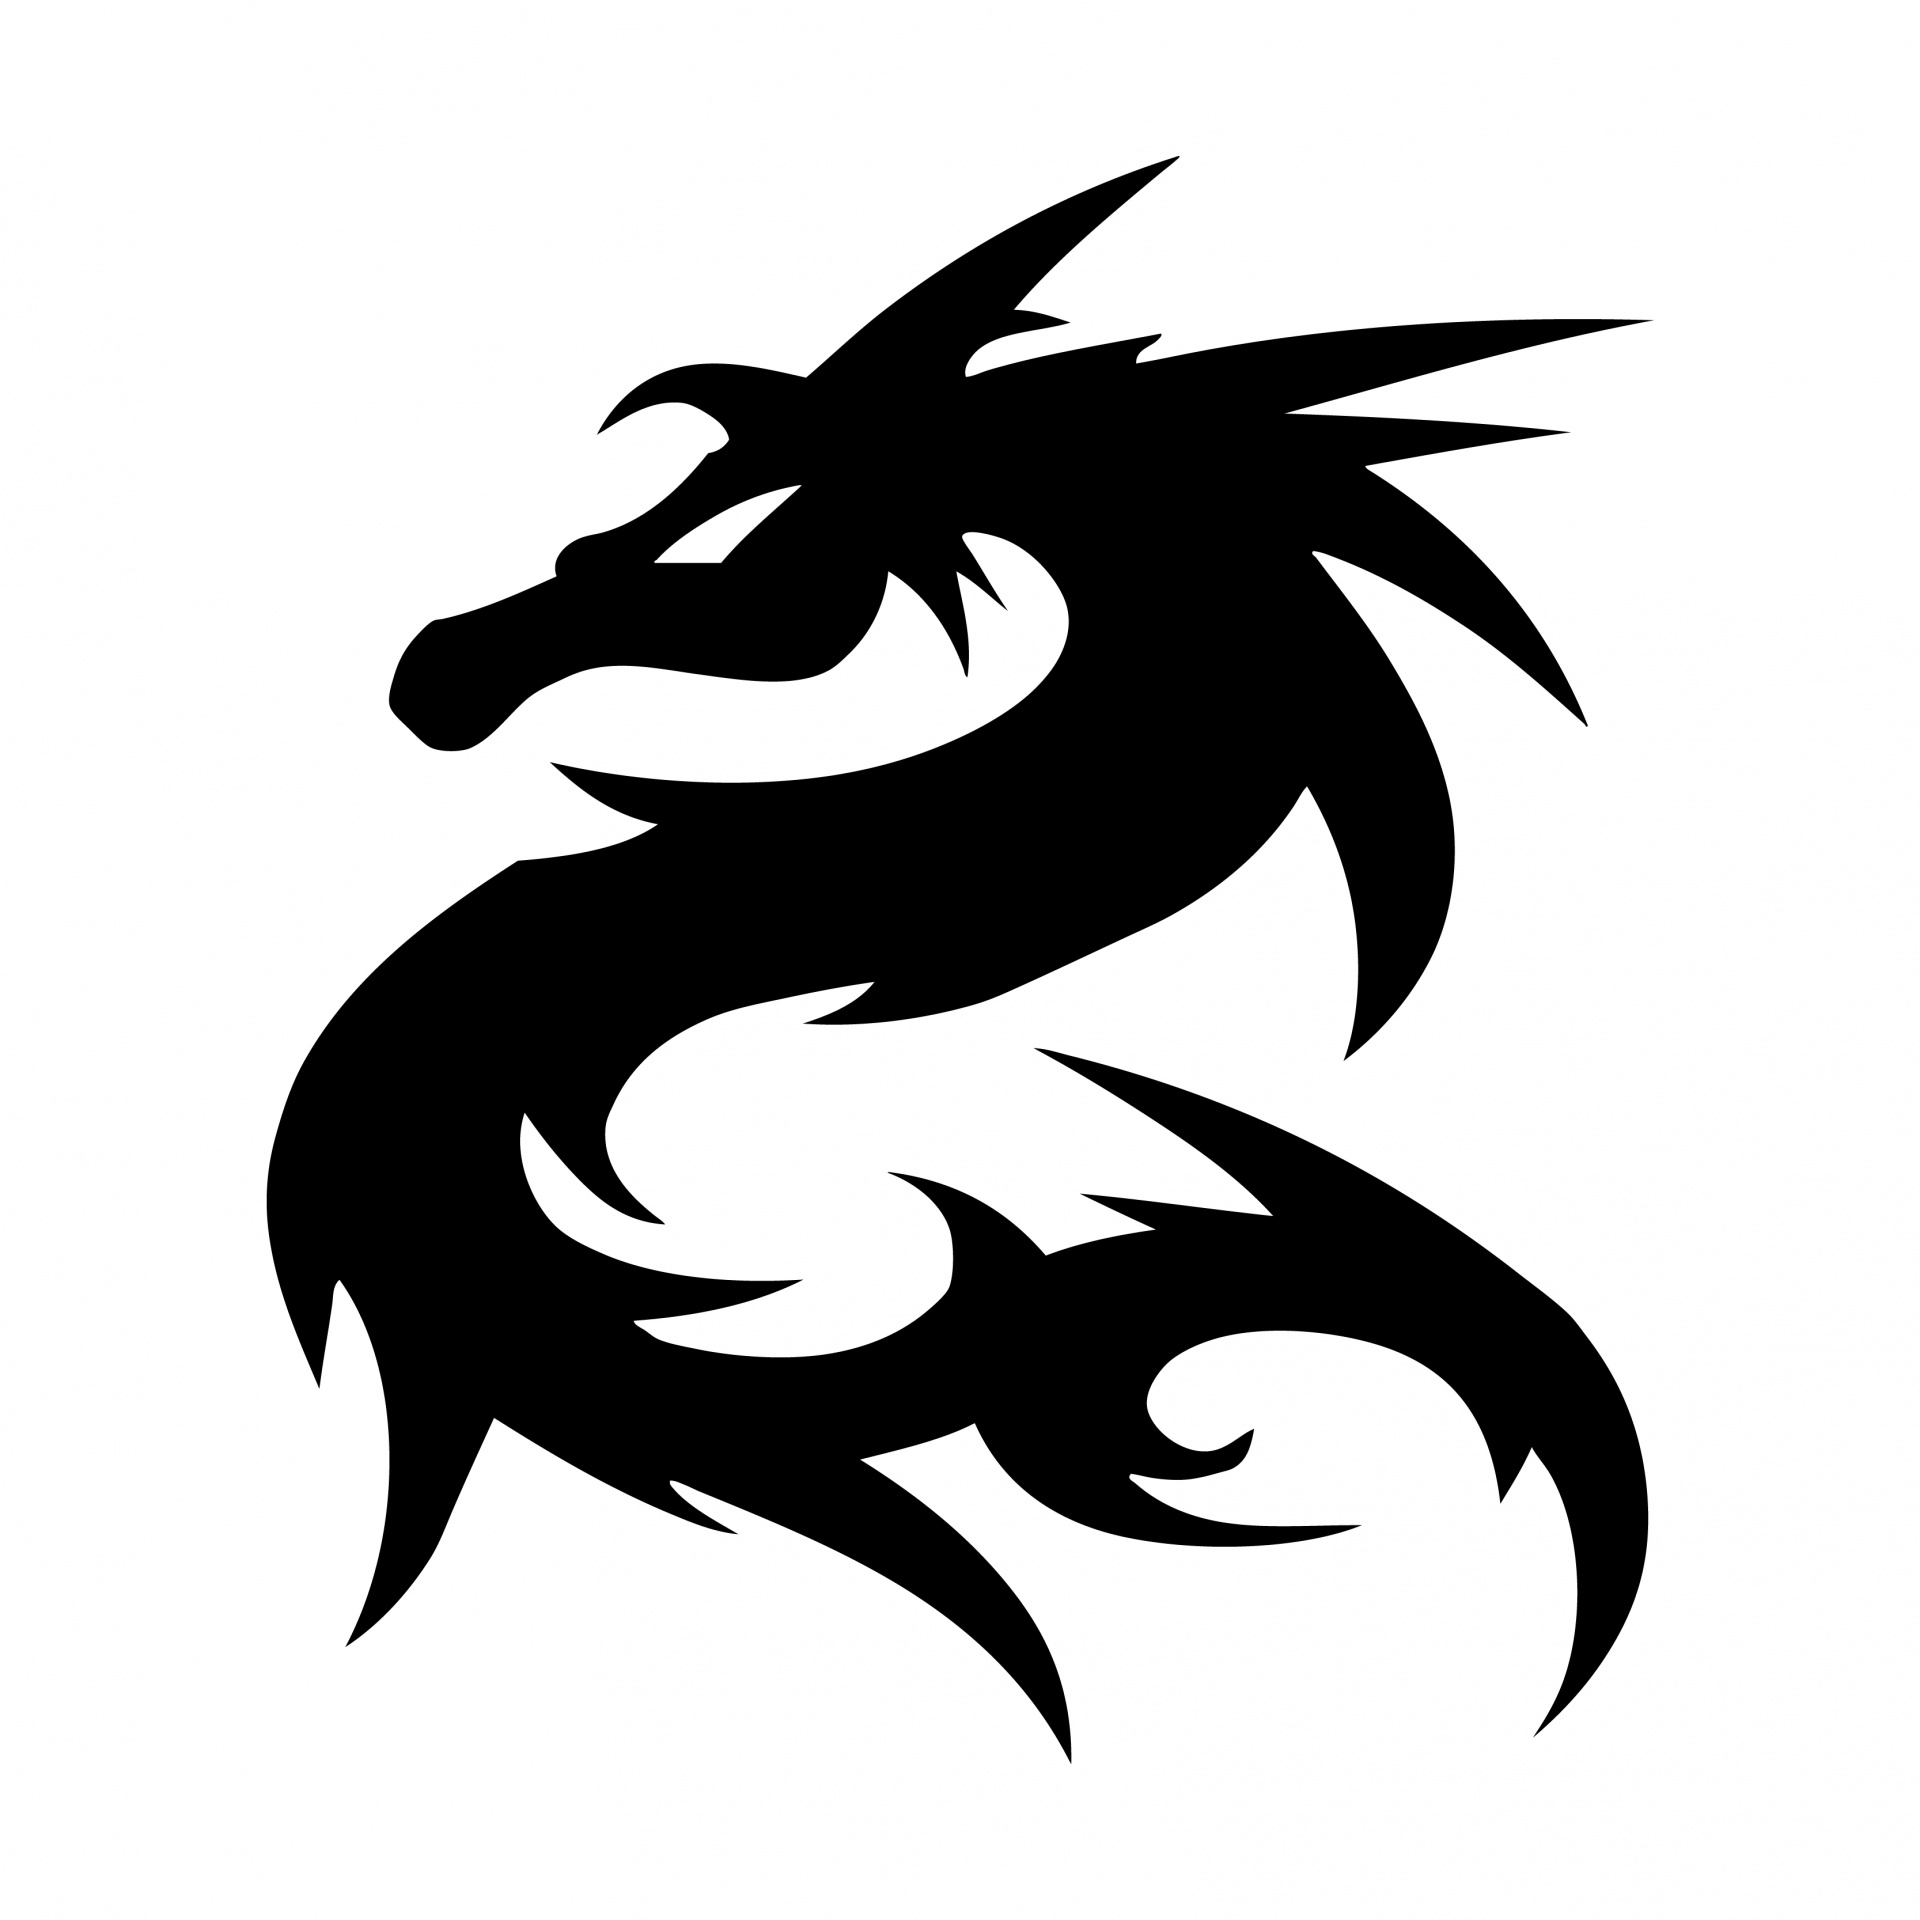 dragon-logo-symbol-silhouette